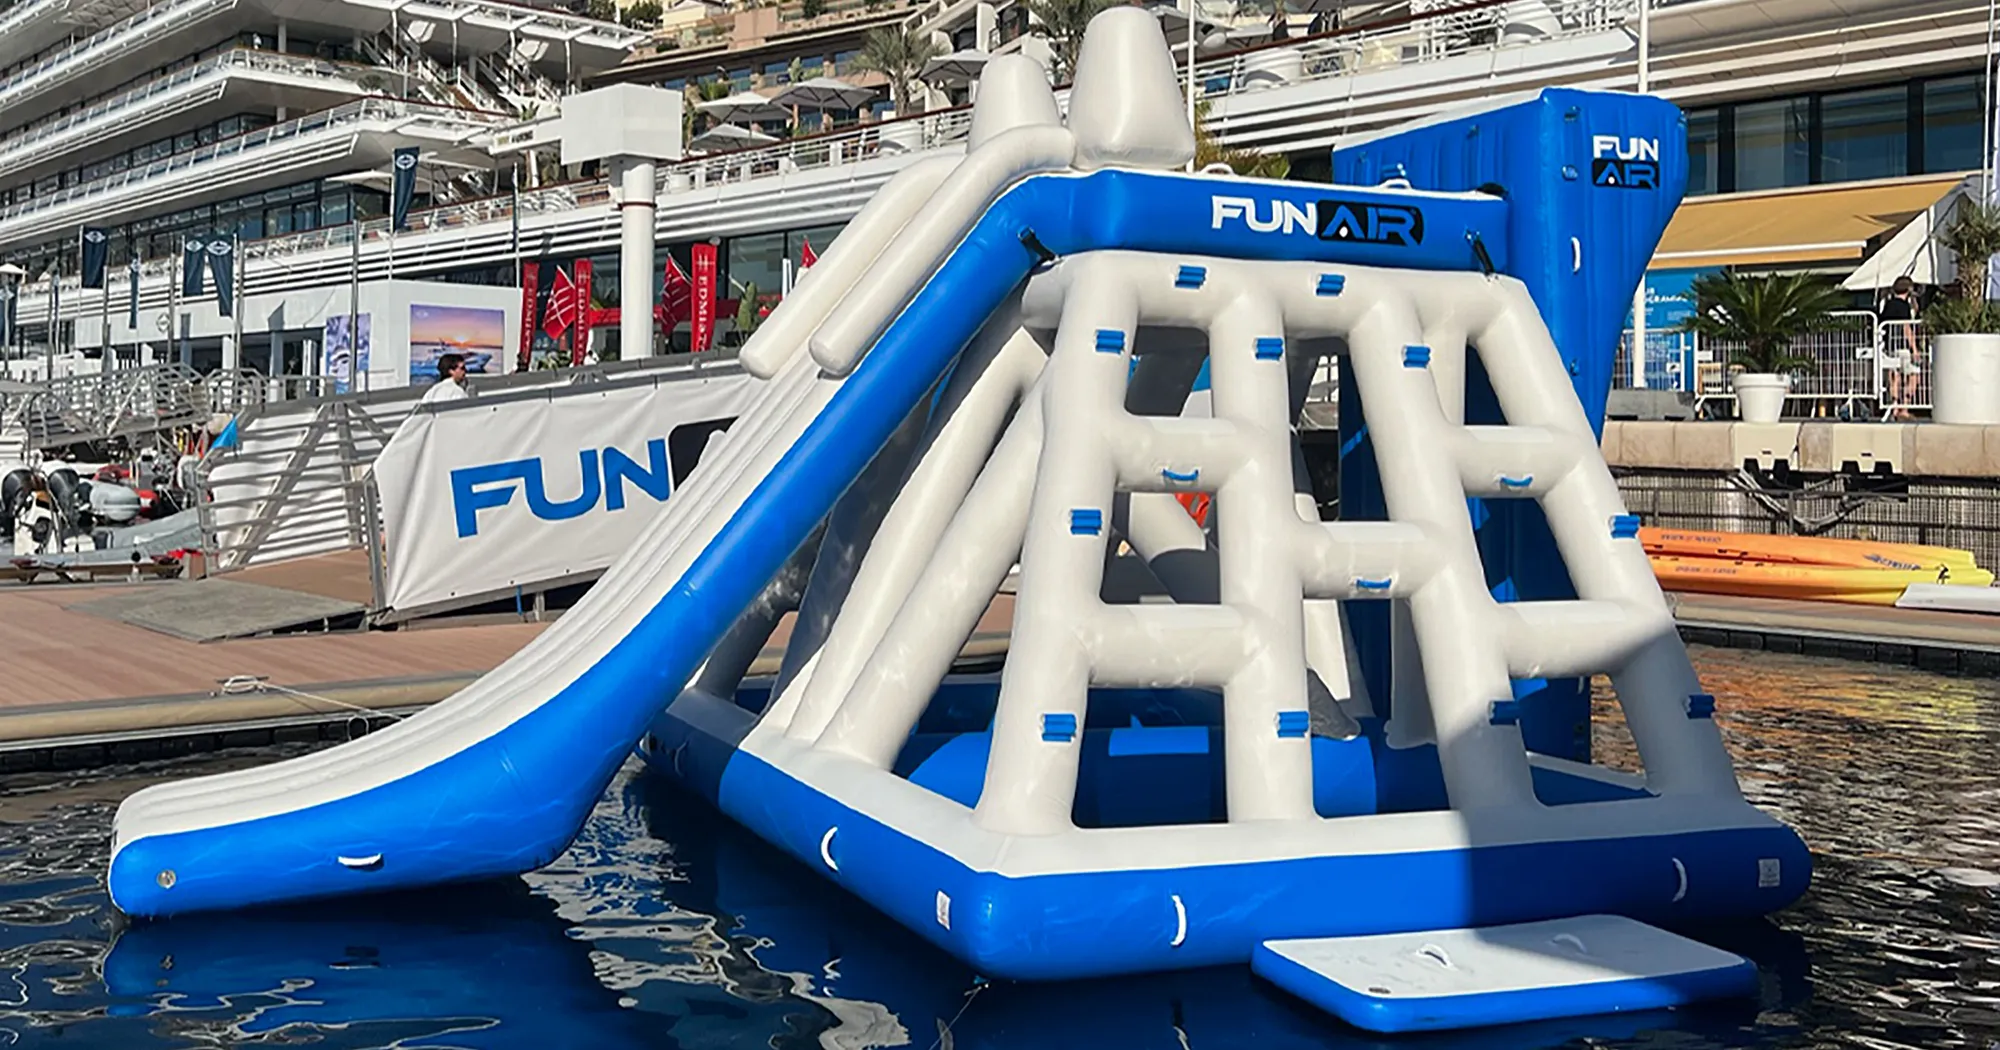 FunAir Climbing Playground on display at Monaco Yacht Show